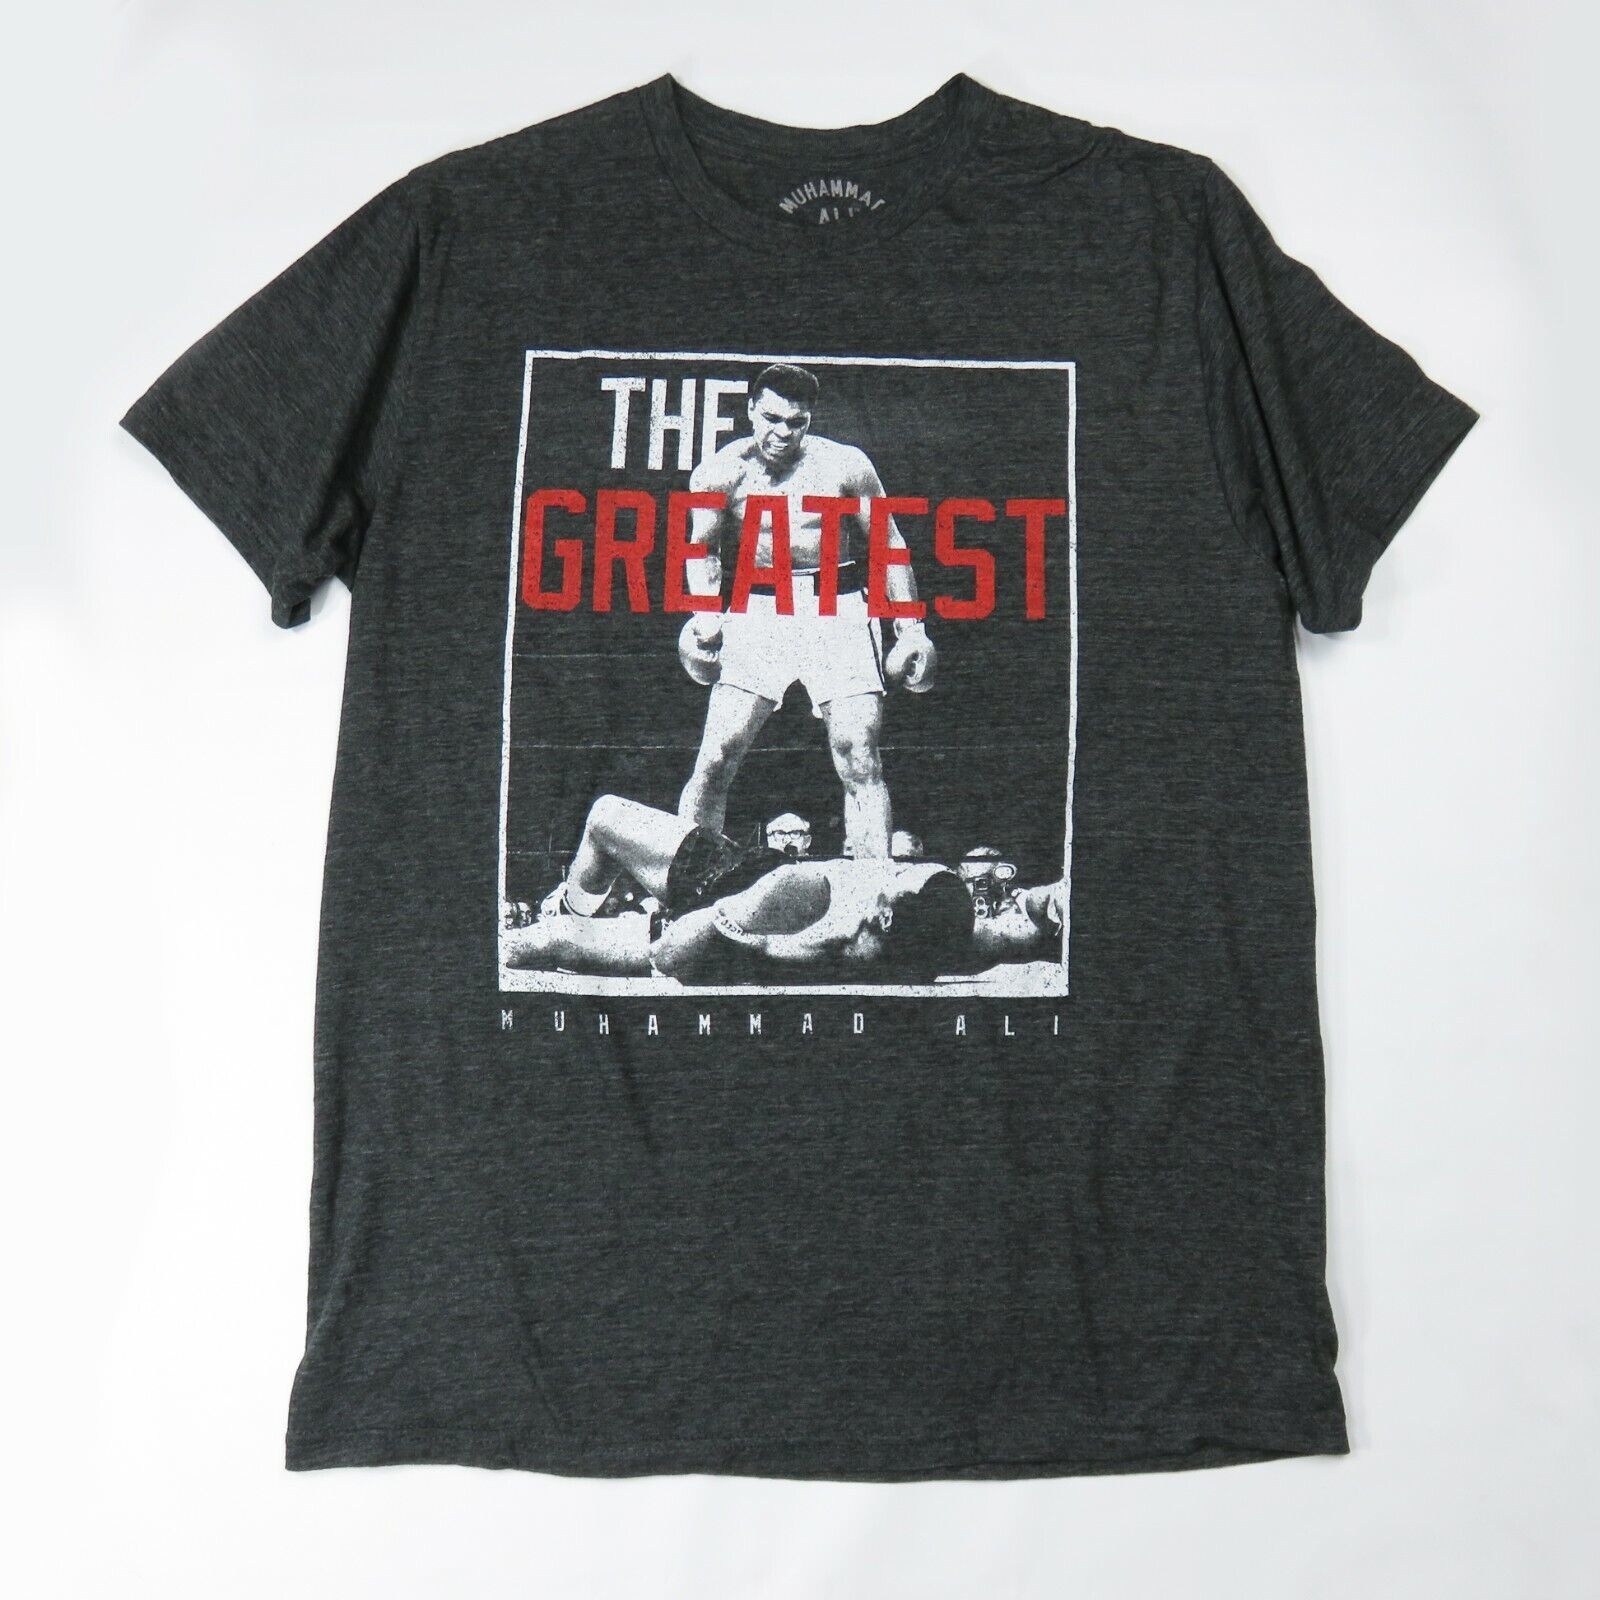 Muhammad Ali The Greatest Boxer Grey T-shirt Tee Cotton Mens Sz XL